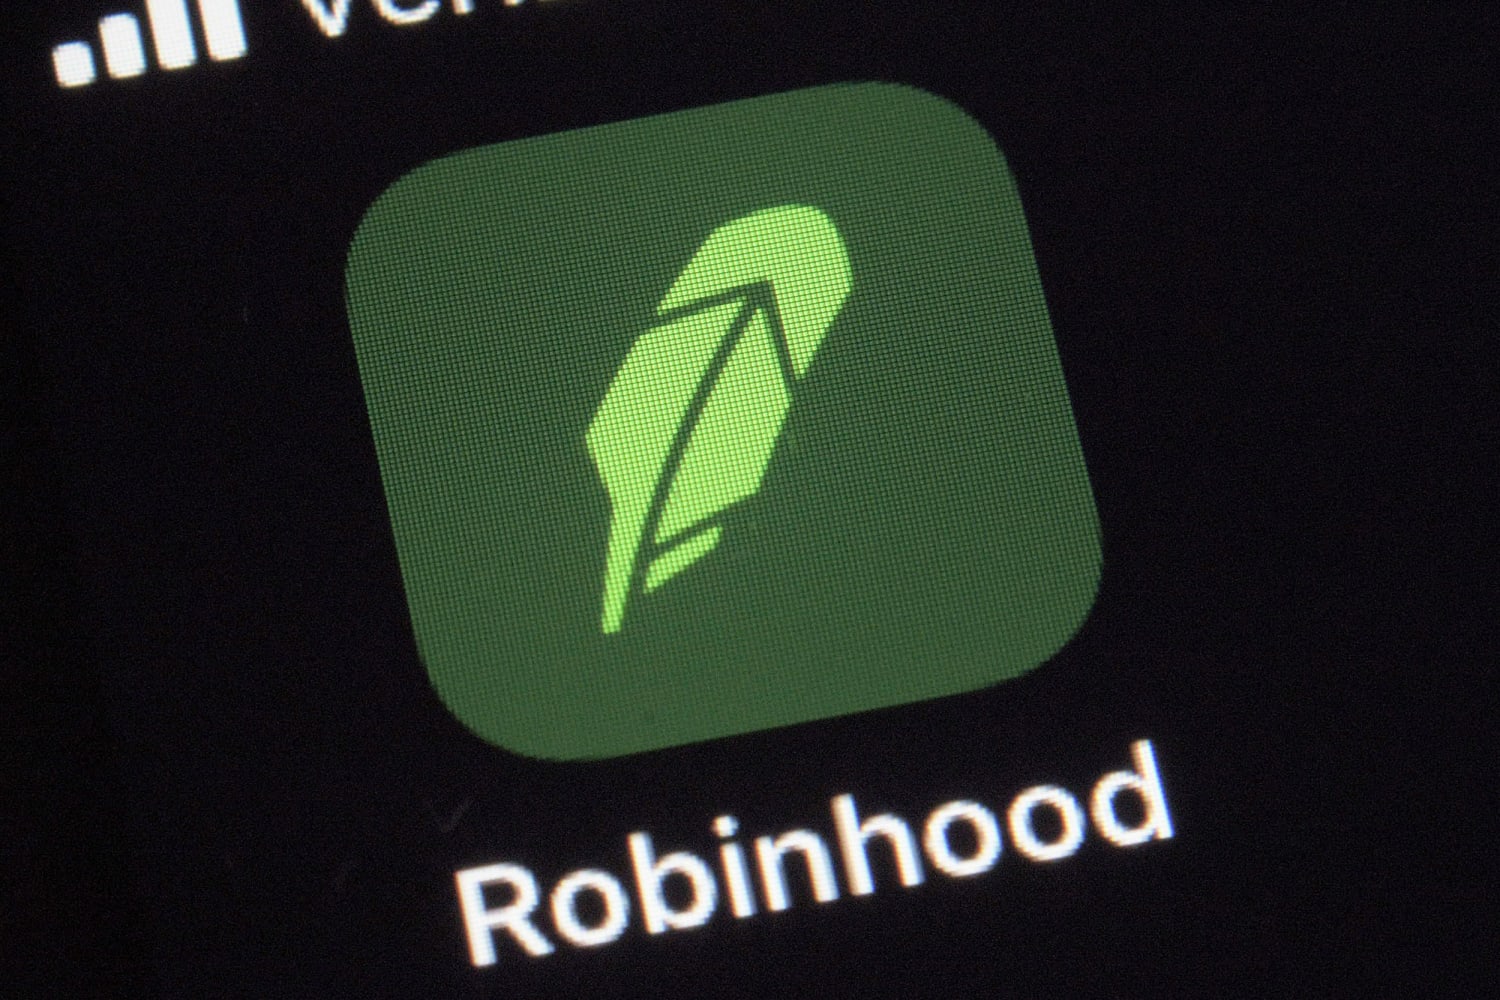 Robinhood faces uncertain future after tumultuous week